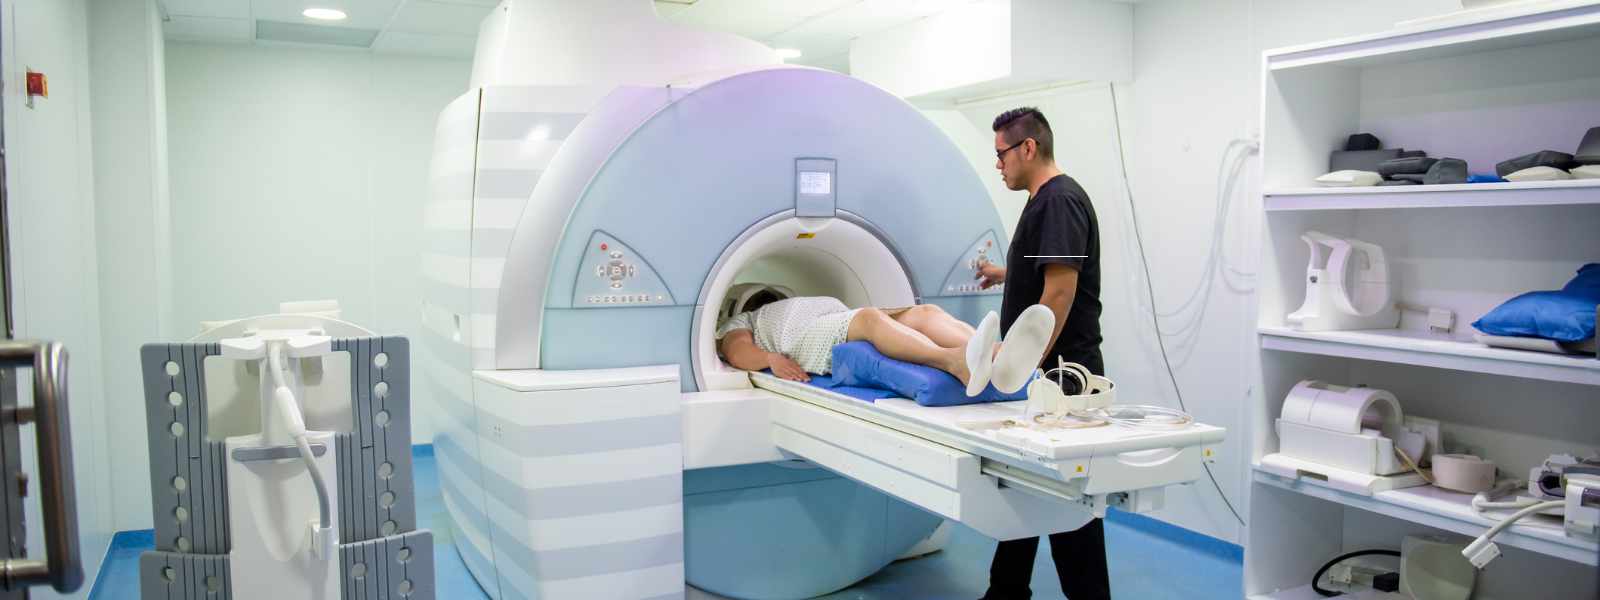 Nurse with a patient inside an MRI machine